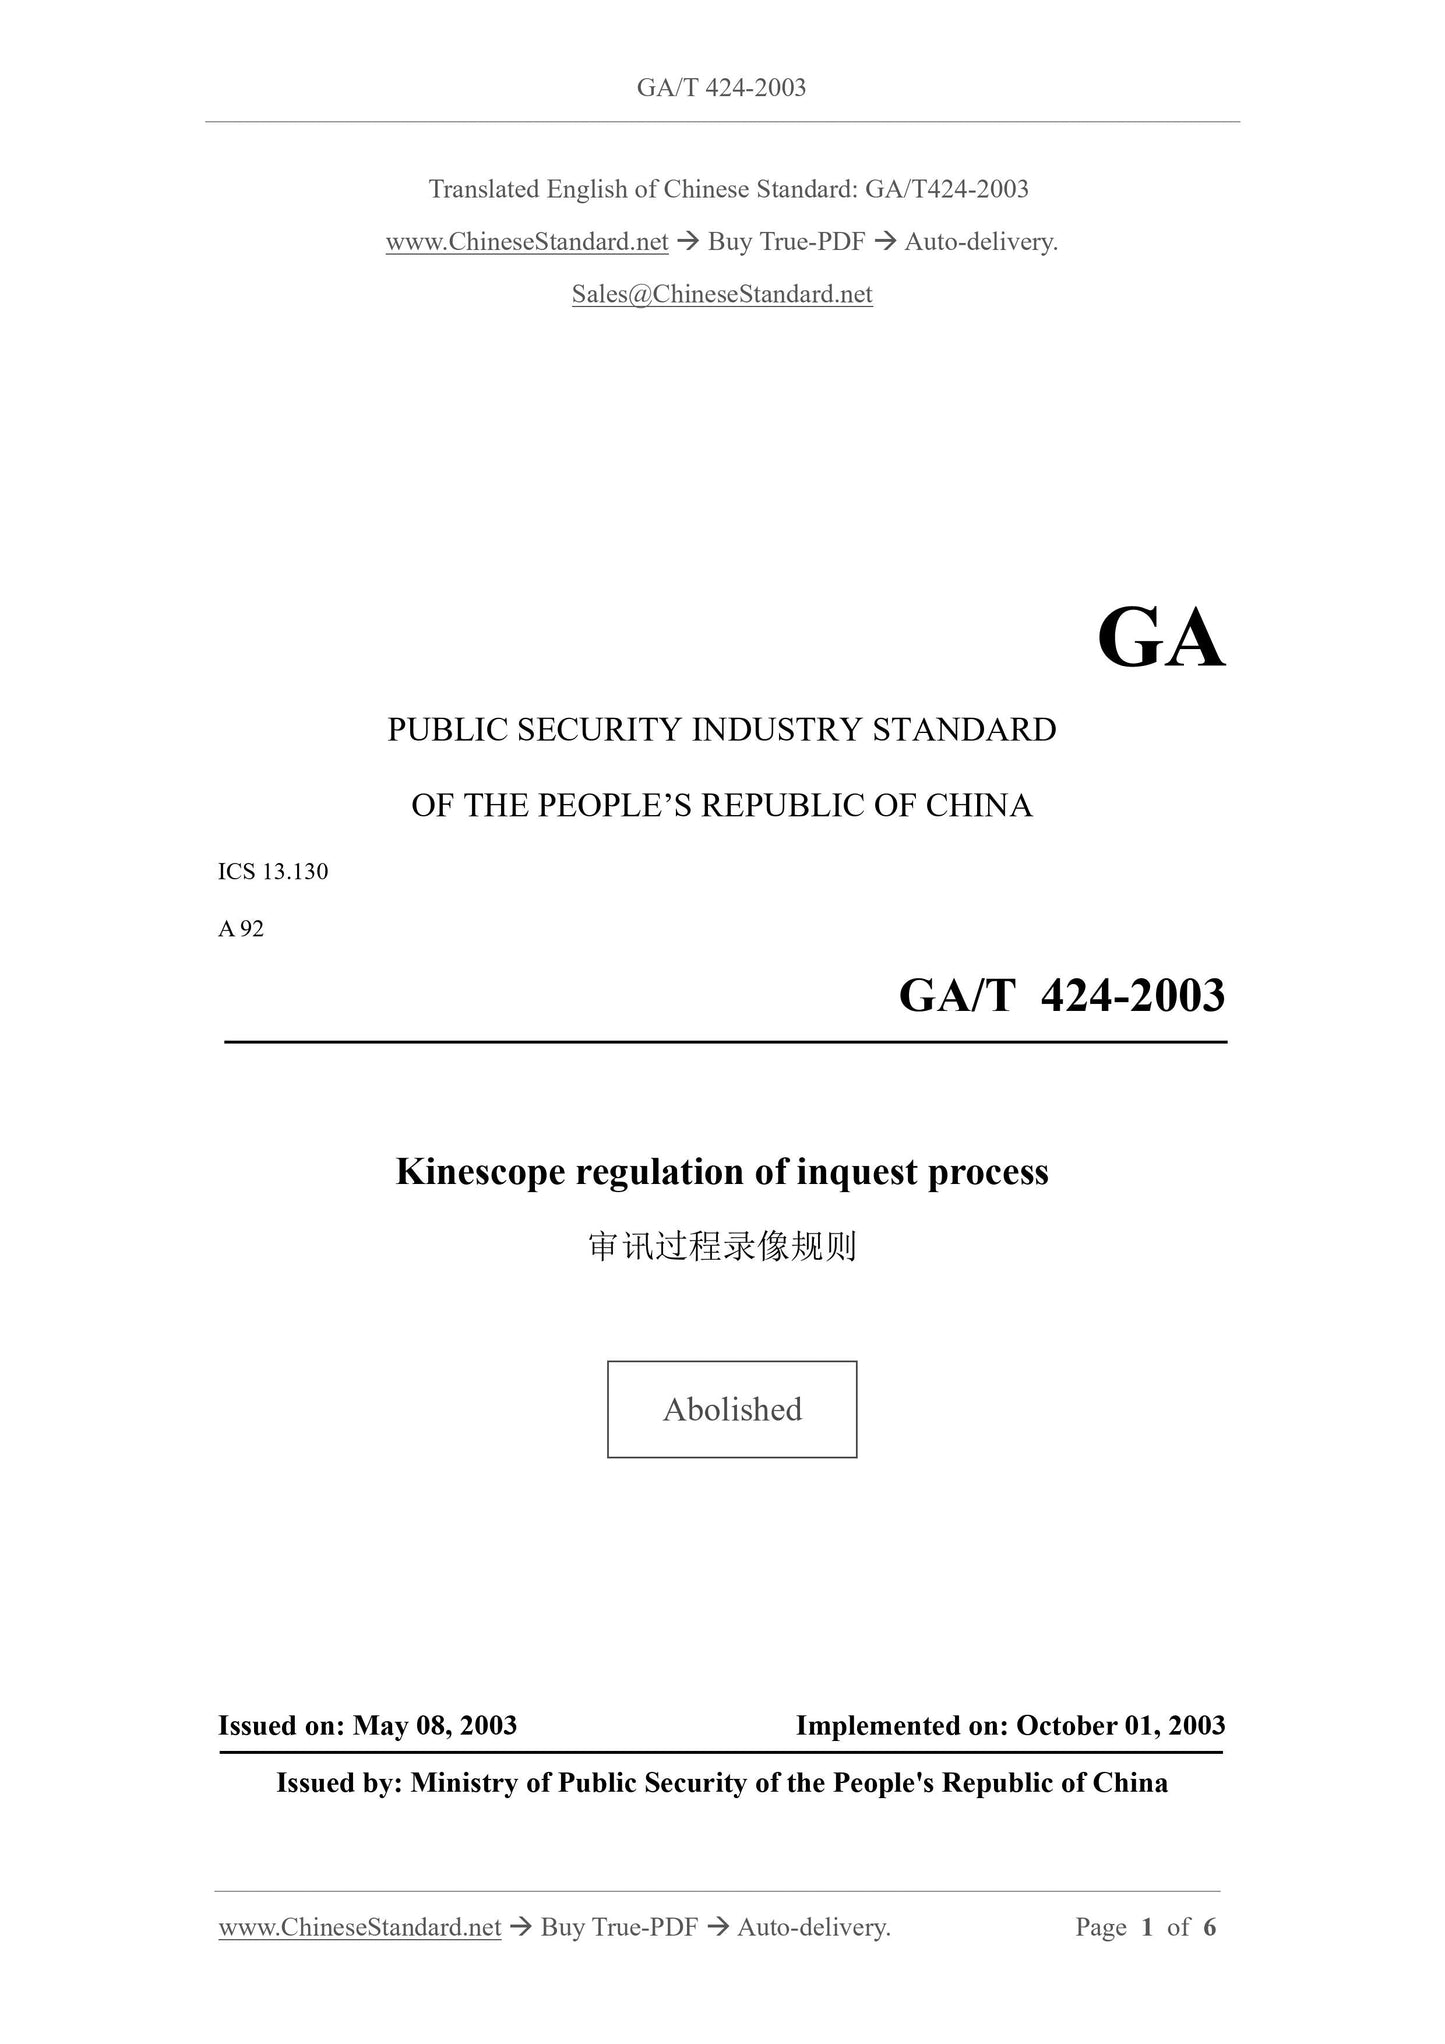 GA/T 424-2003 Page 1